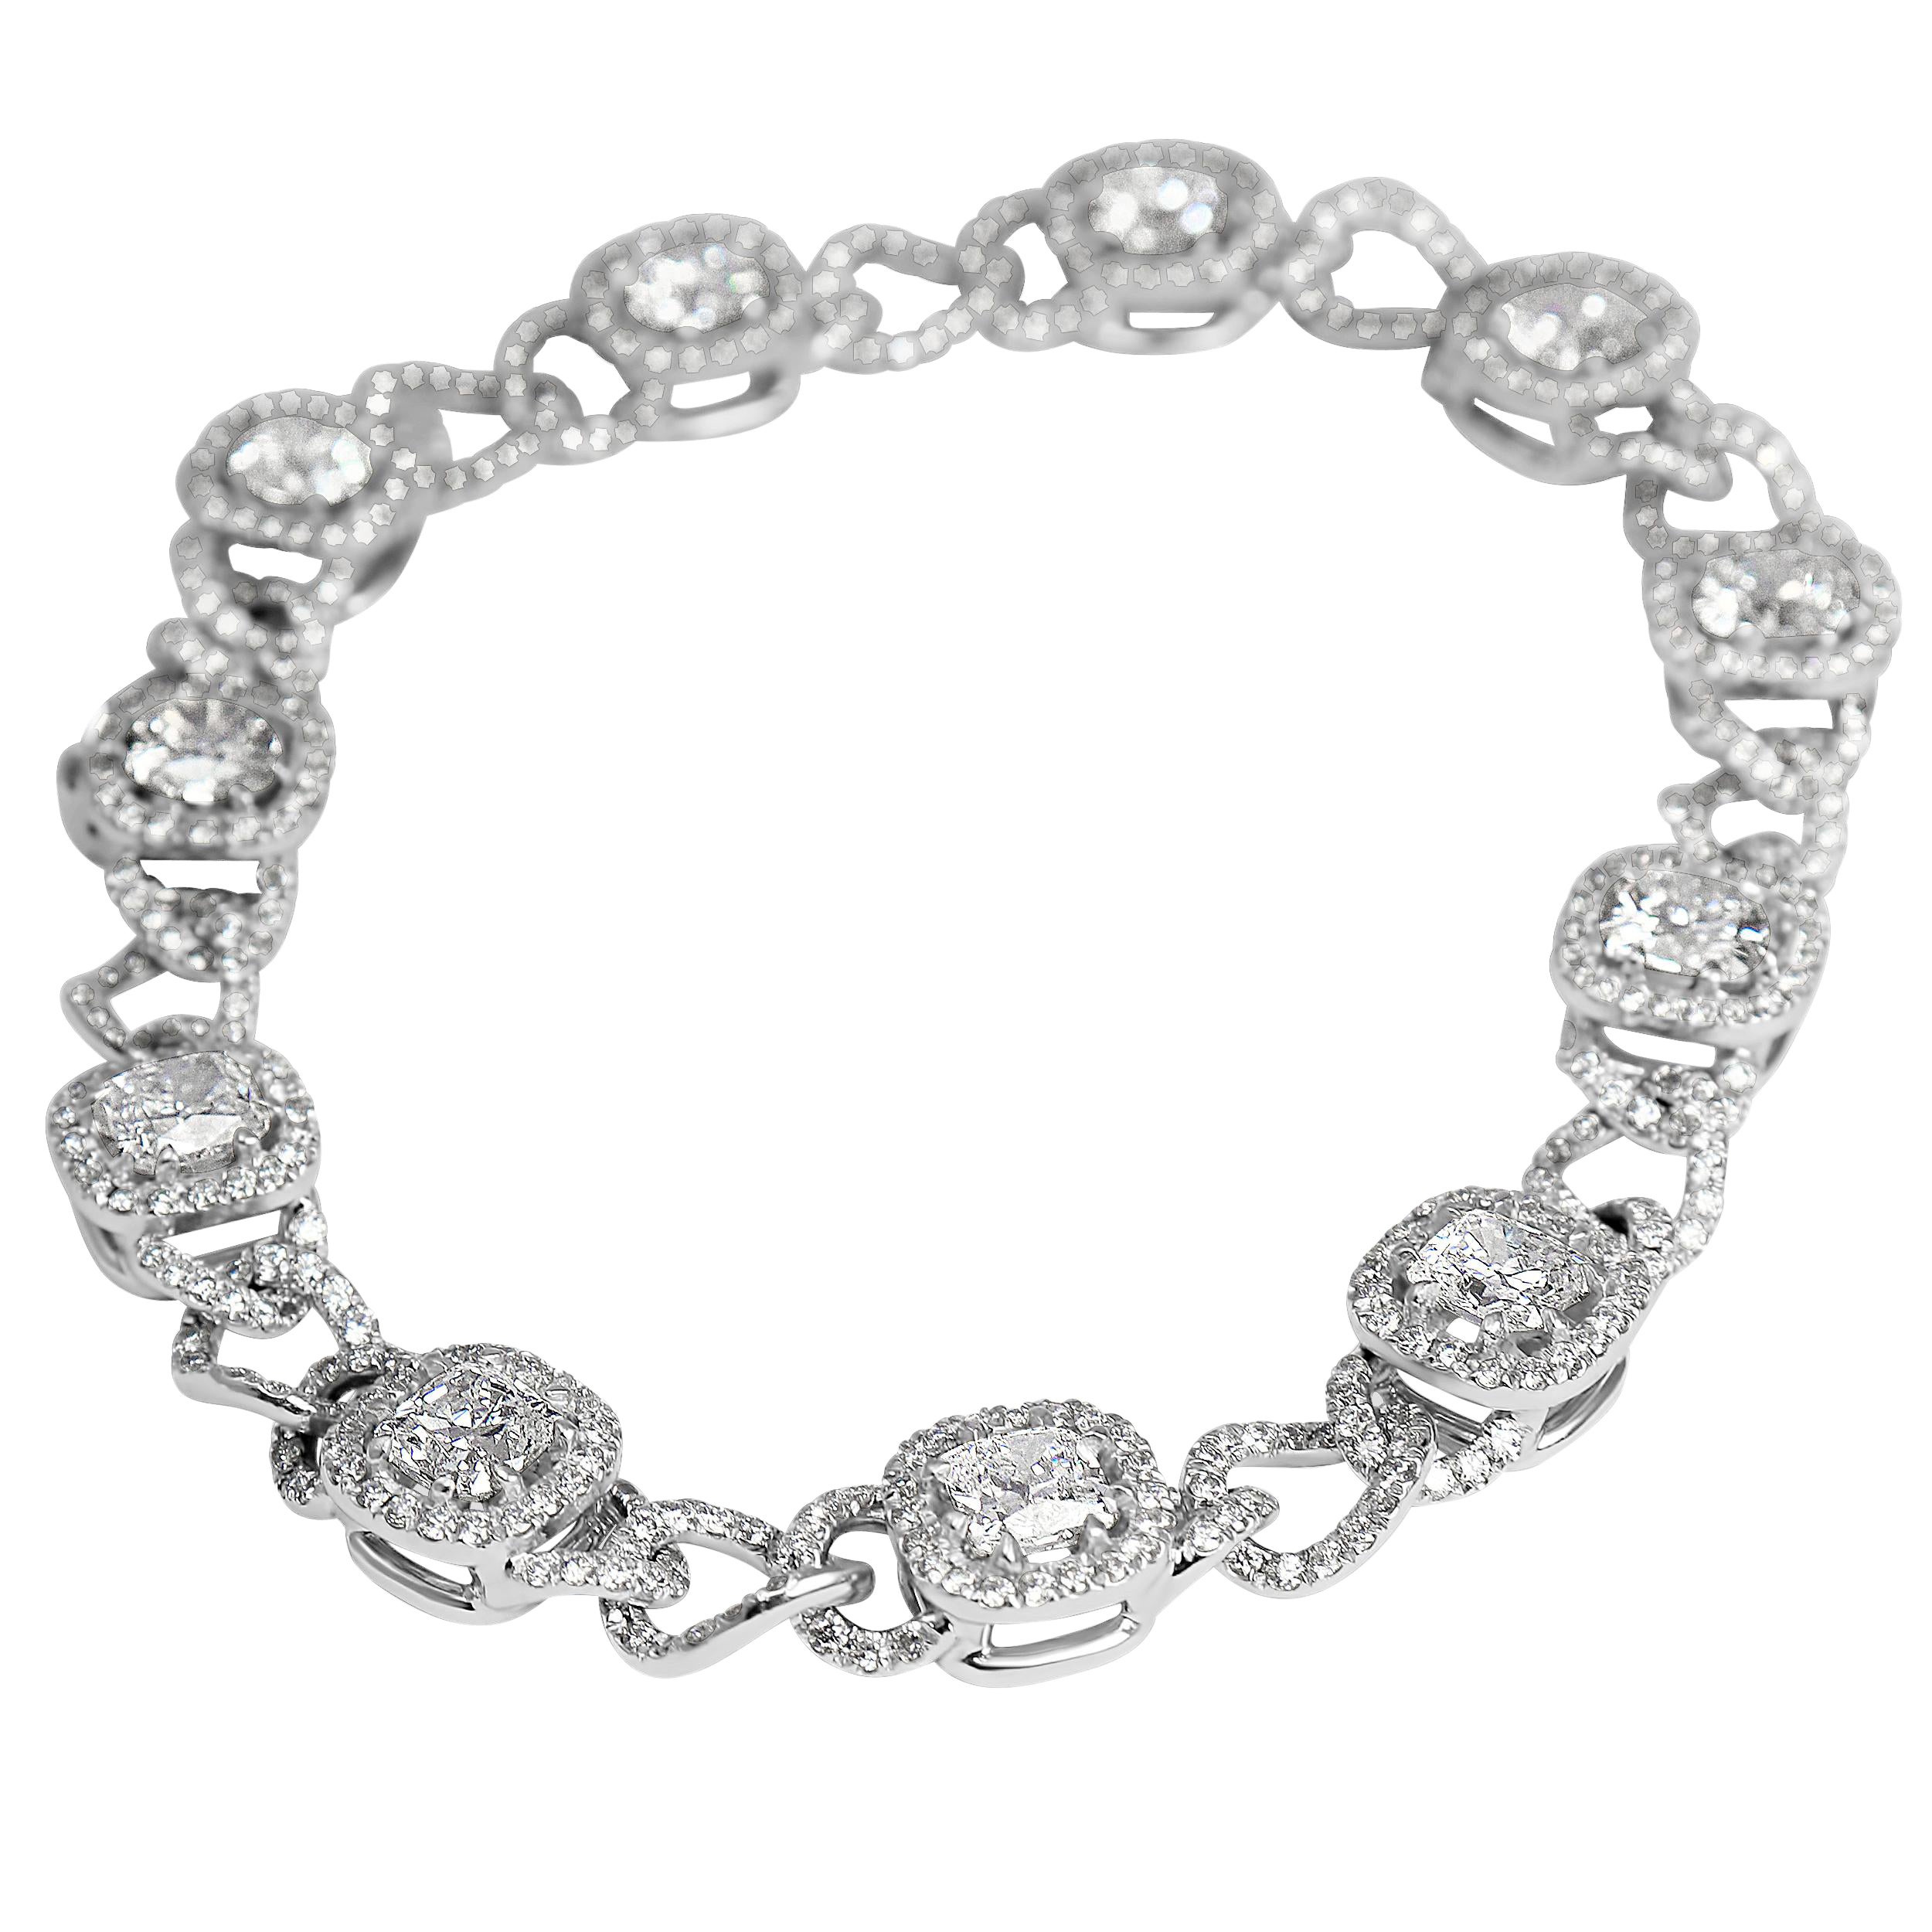 J. Birnbach 7.69 carat Diamond Pave Curb Link Bracelet with Cushion Diamonds